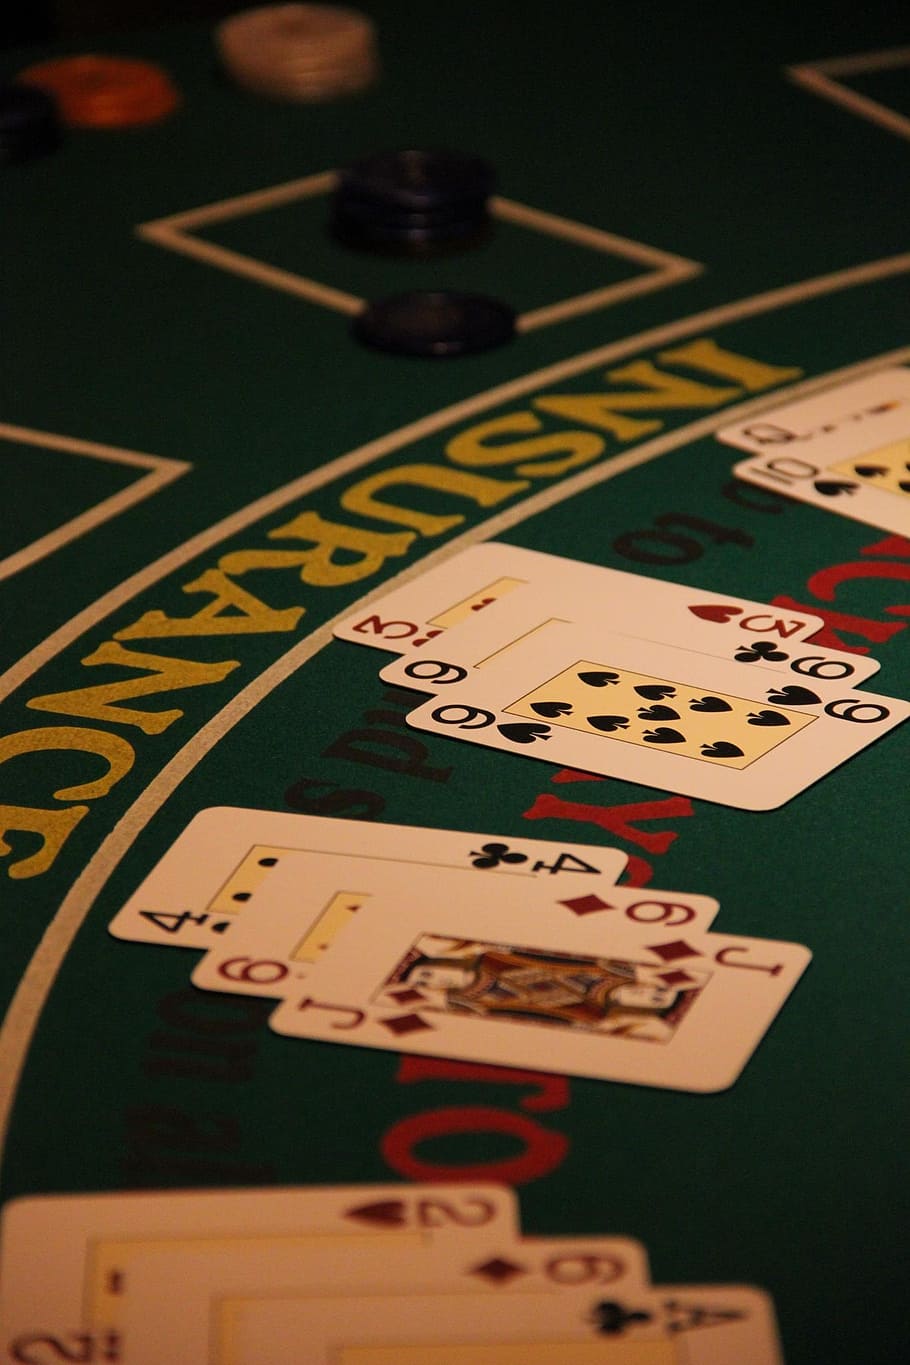 casino-cards-play-gambling.jpg